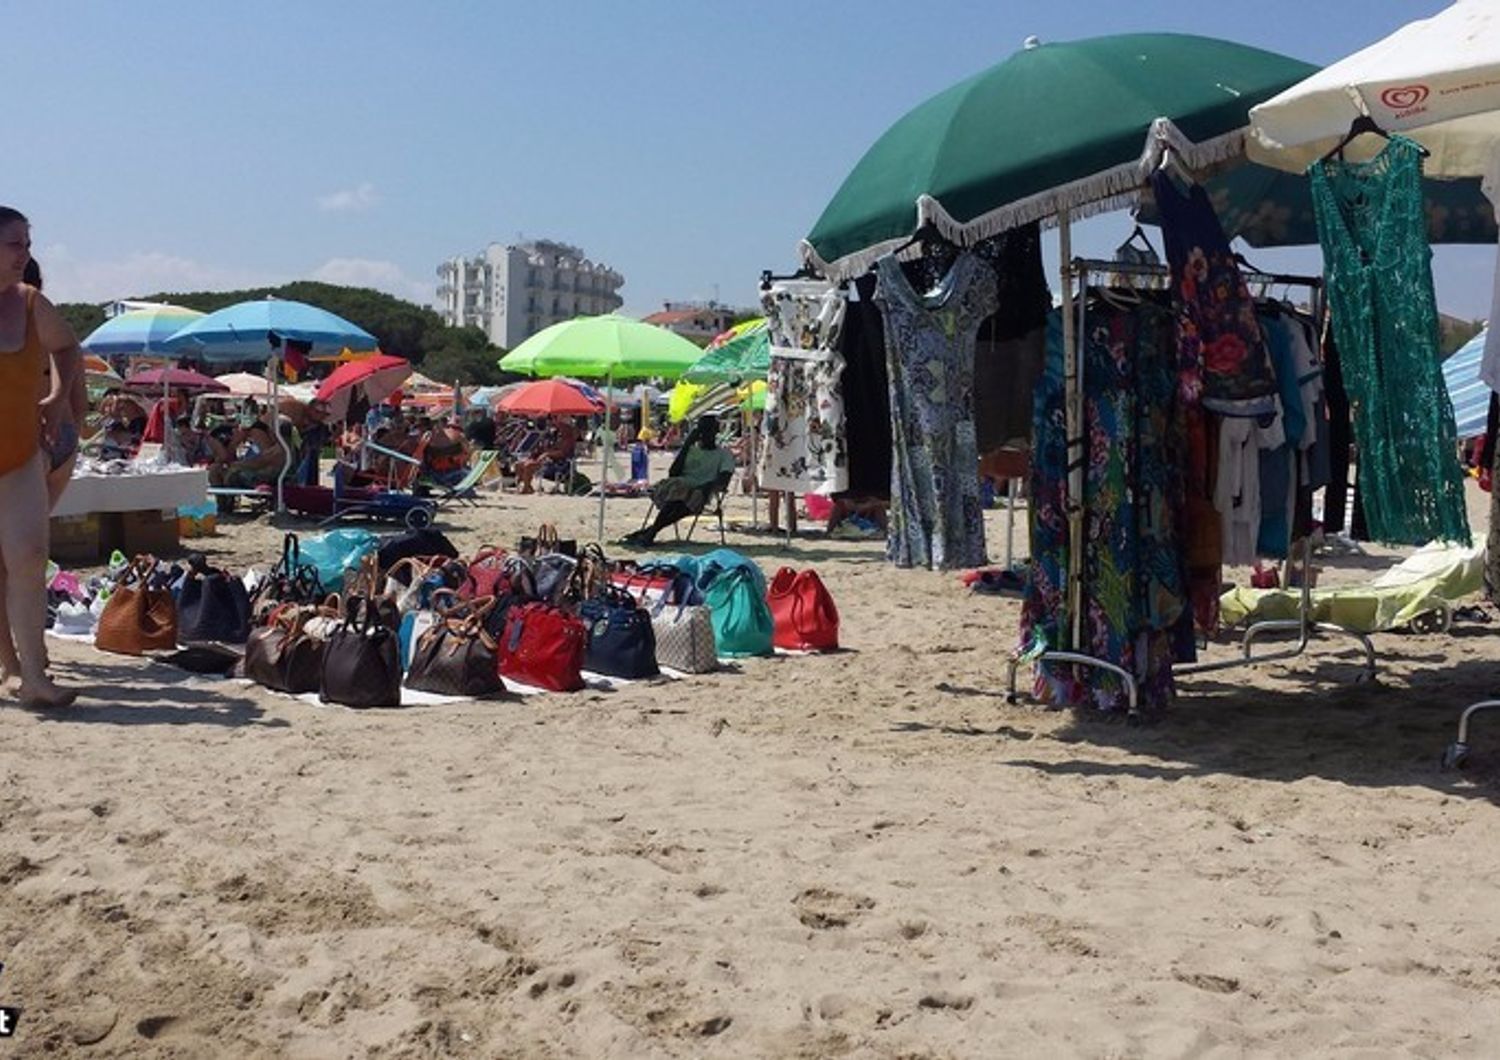 &nbsp;Spiaggia affollata lido estate venditori ambulanti - youreporter